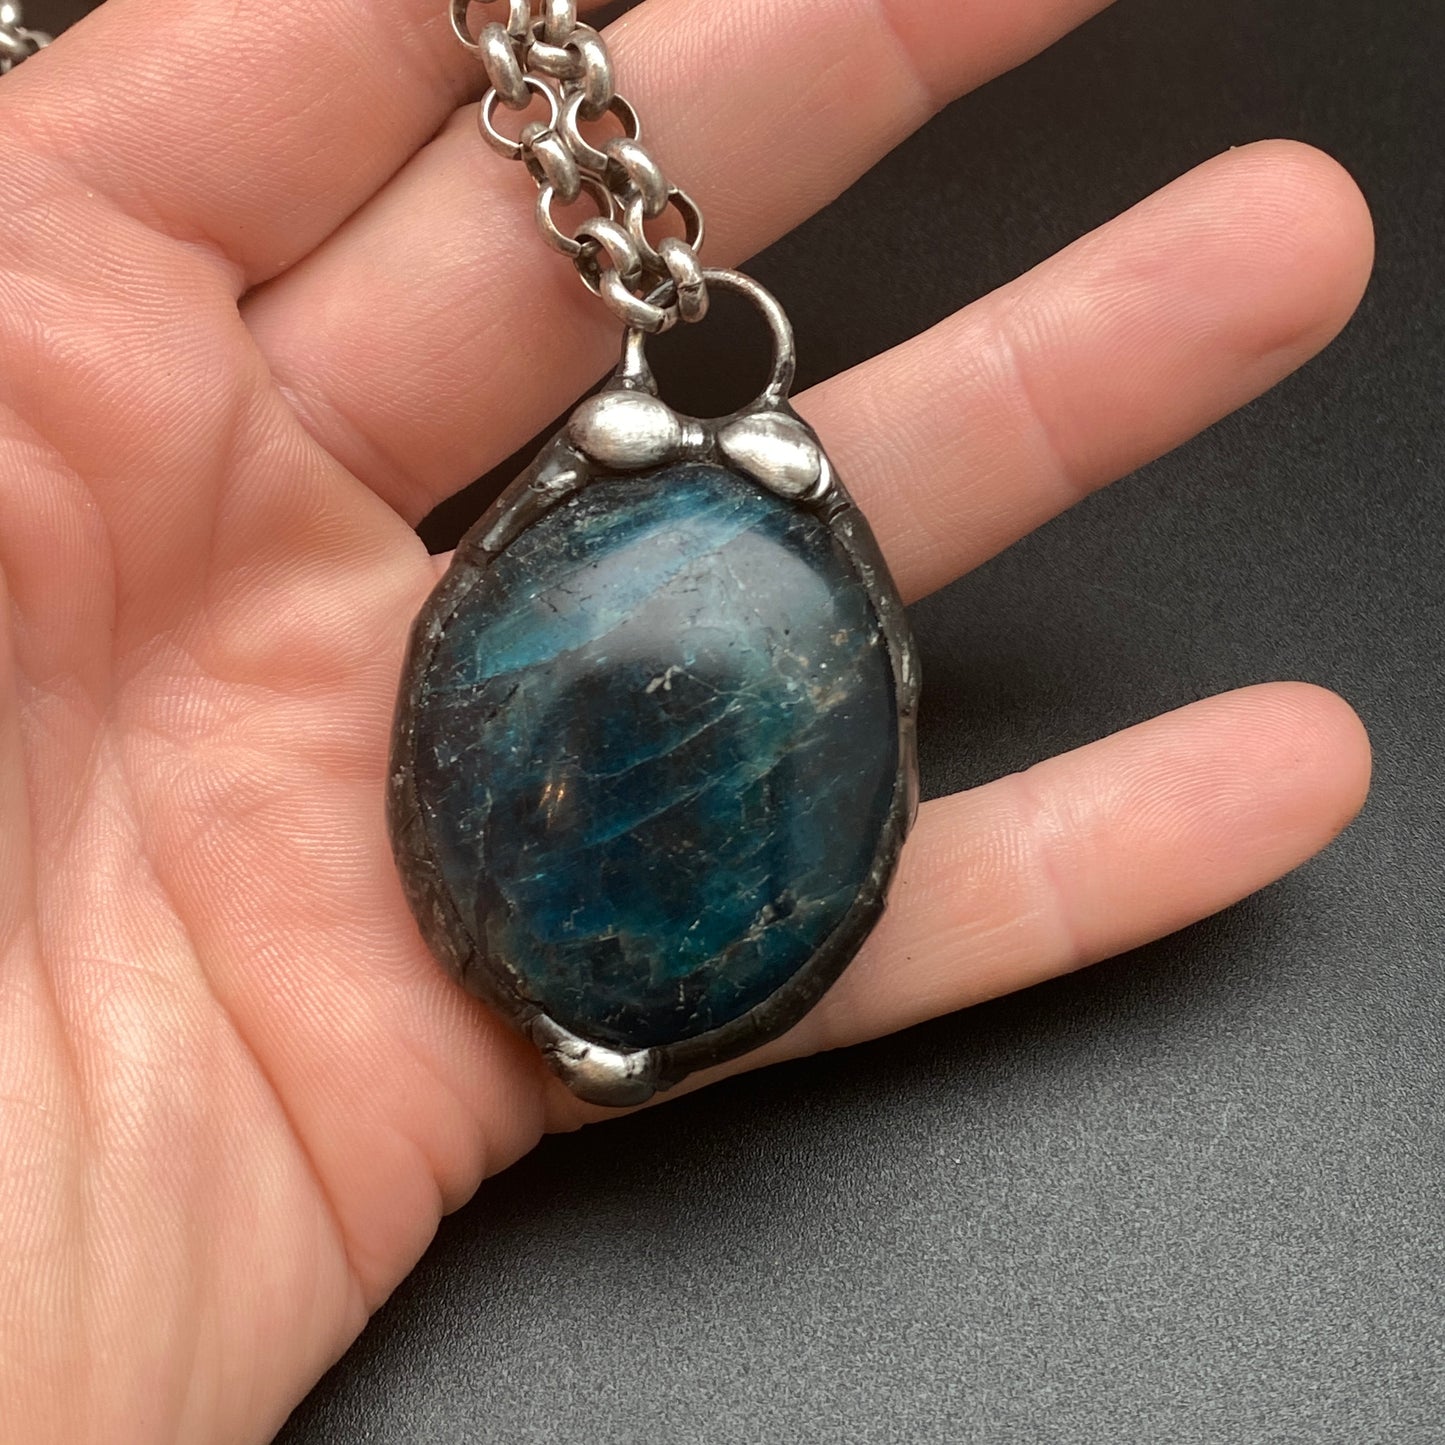 Seer ~ Blue Apatite Talisman Necklace